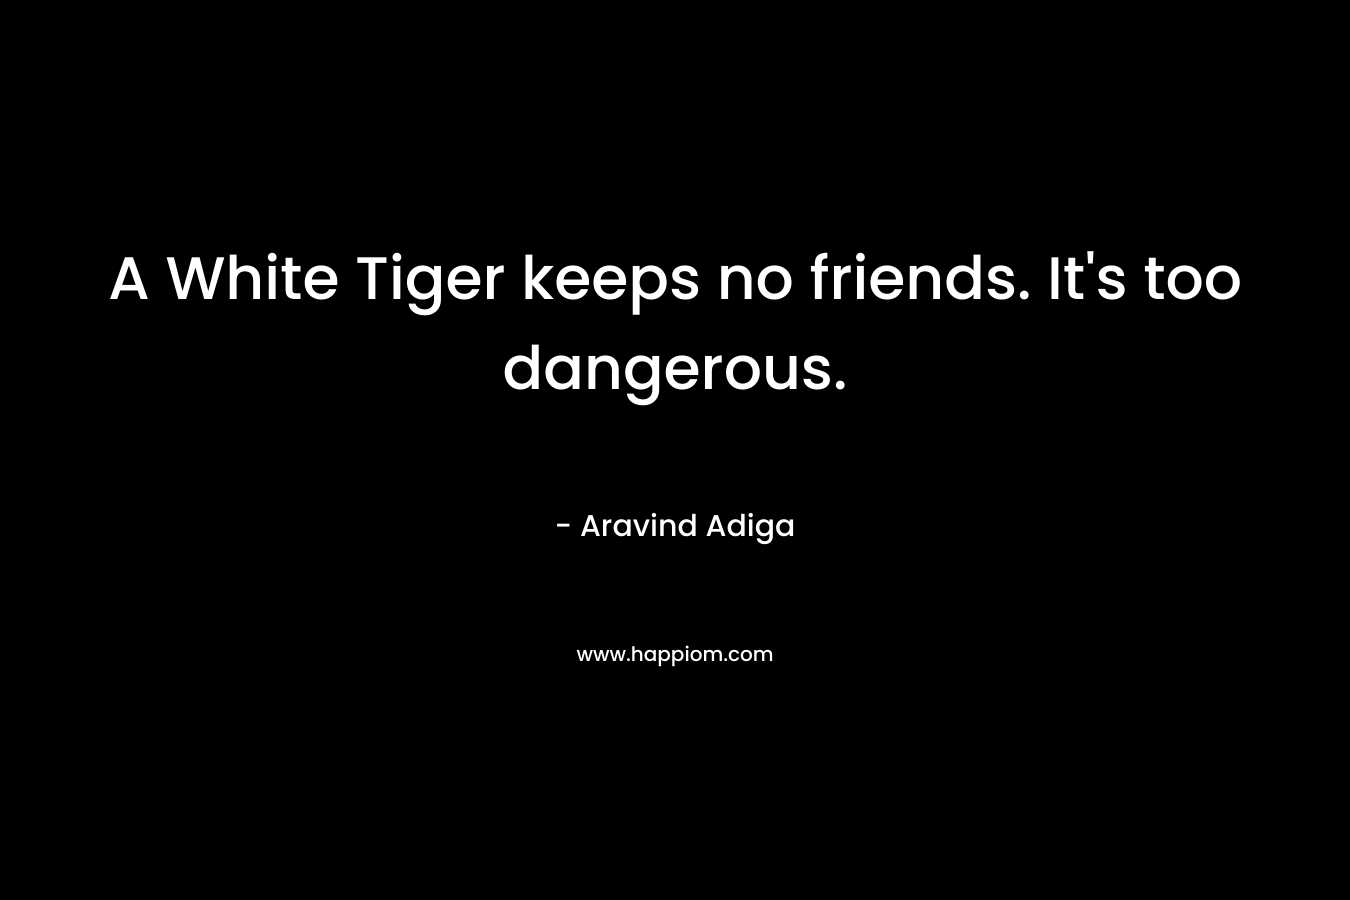 A White Tiger keeps no friends. It’s too dangerous. – Aravind Adiga